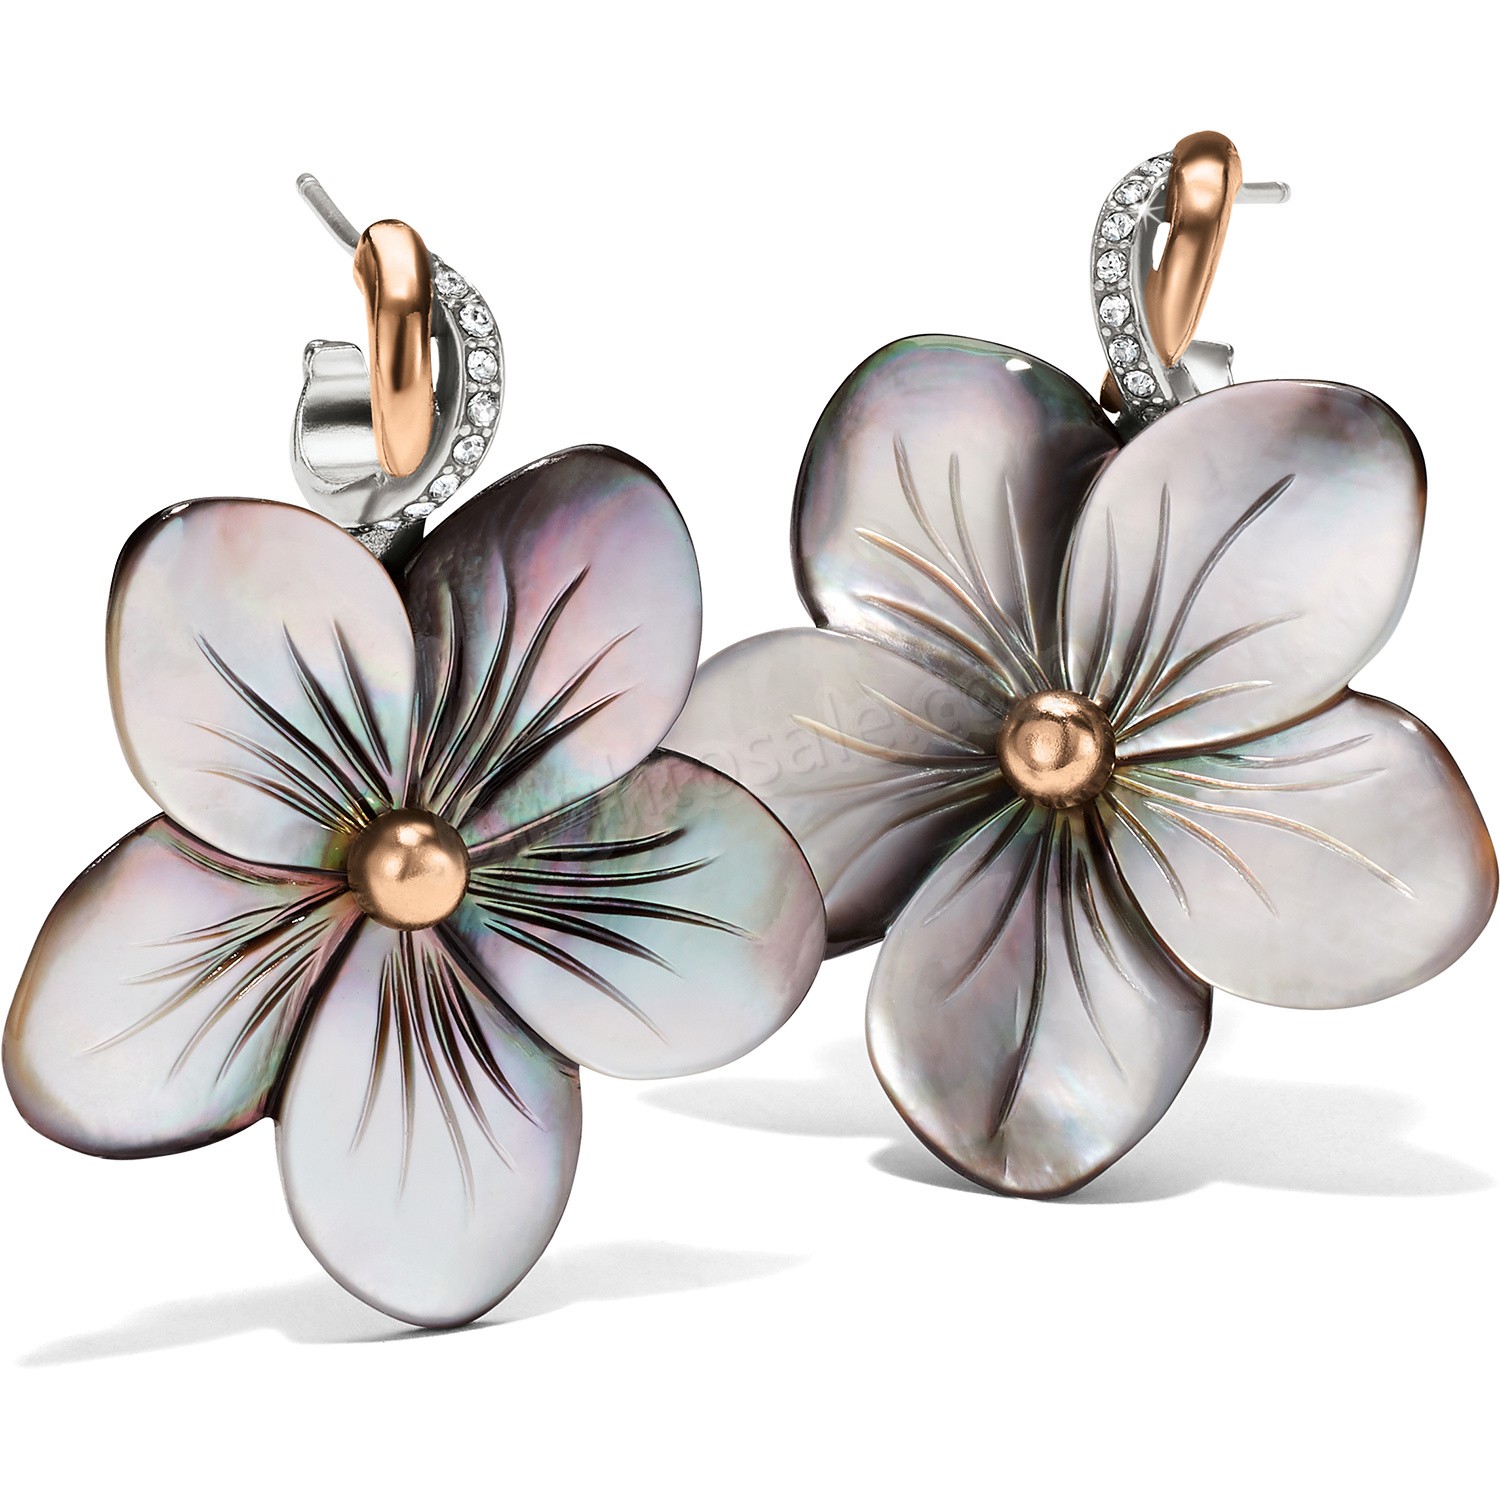 Brighton Collectibles & Online Discount Neptune's Rings Shell Flower Earrings - Brighton Collectibles & Online Discount Neptune's Rings Shell Flower Earrings